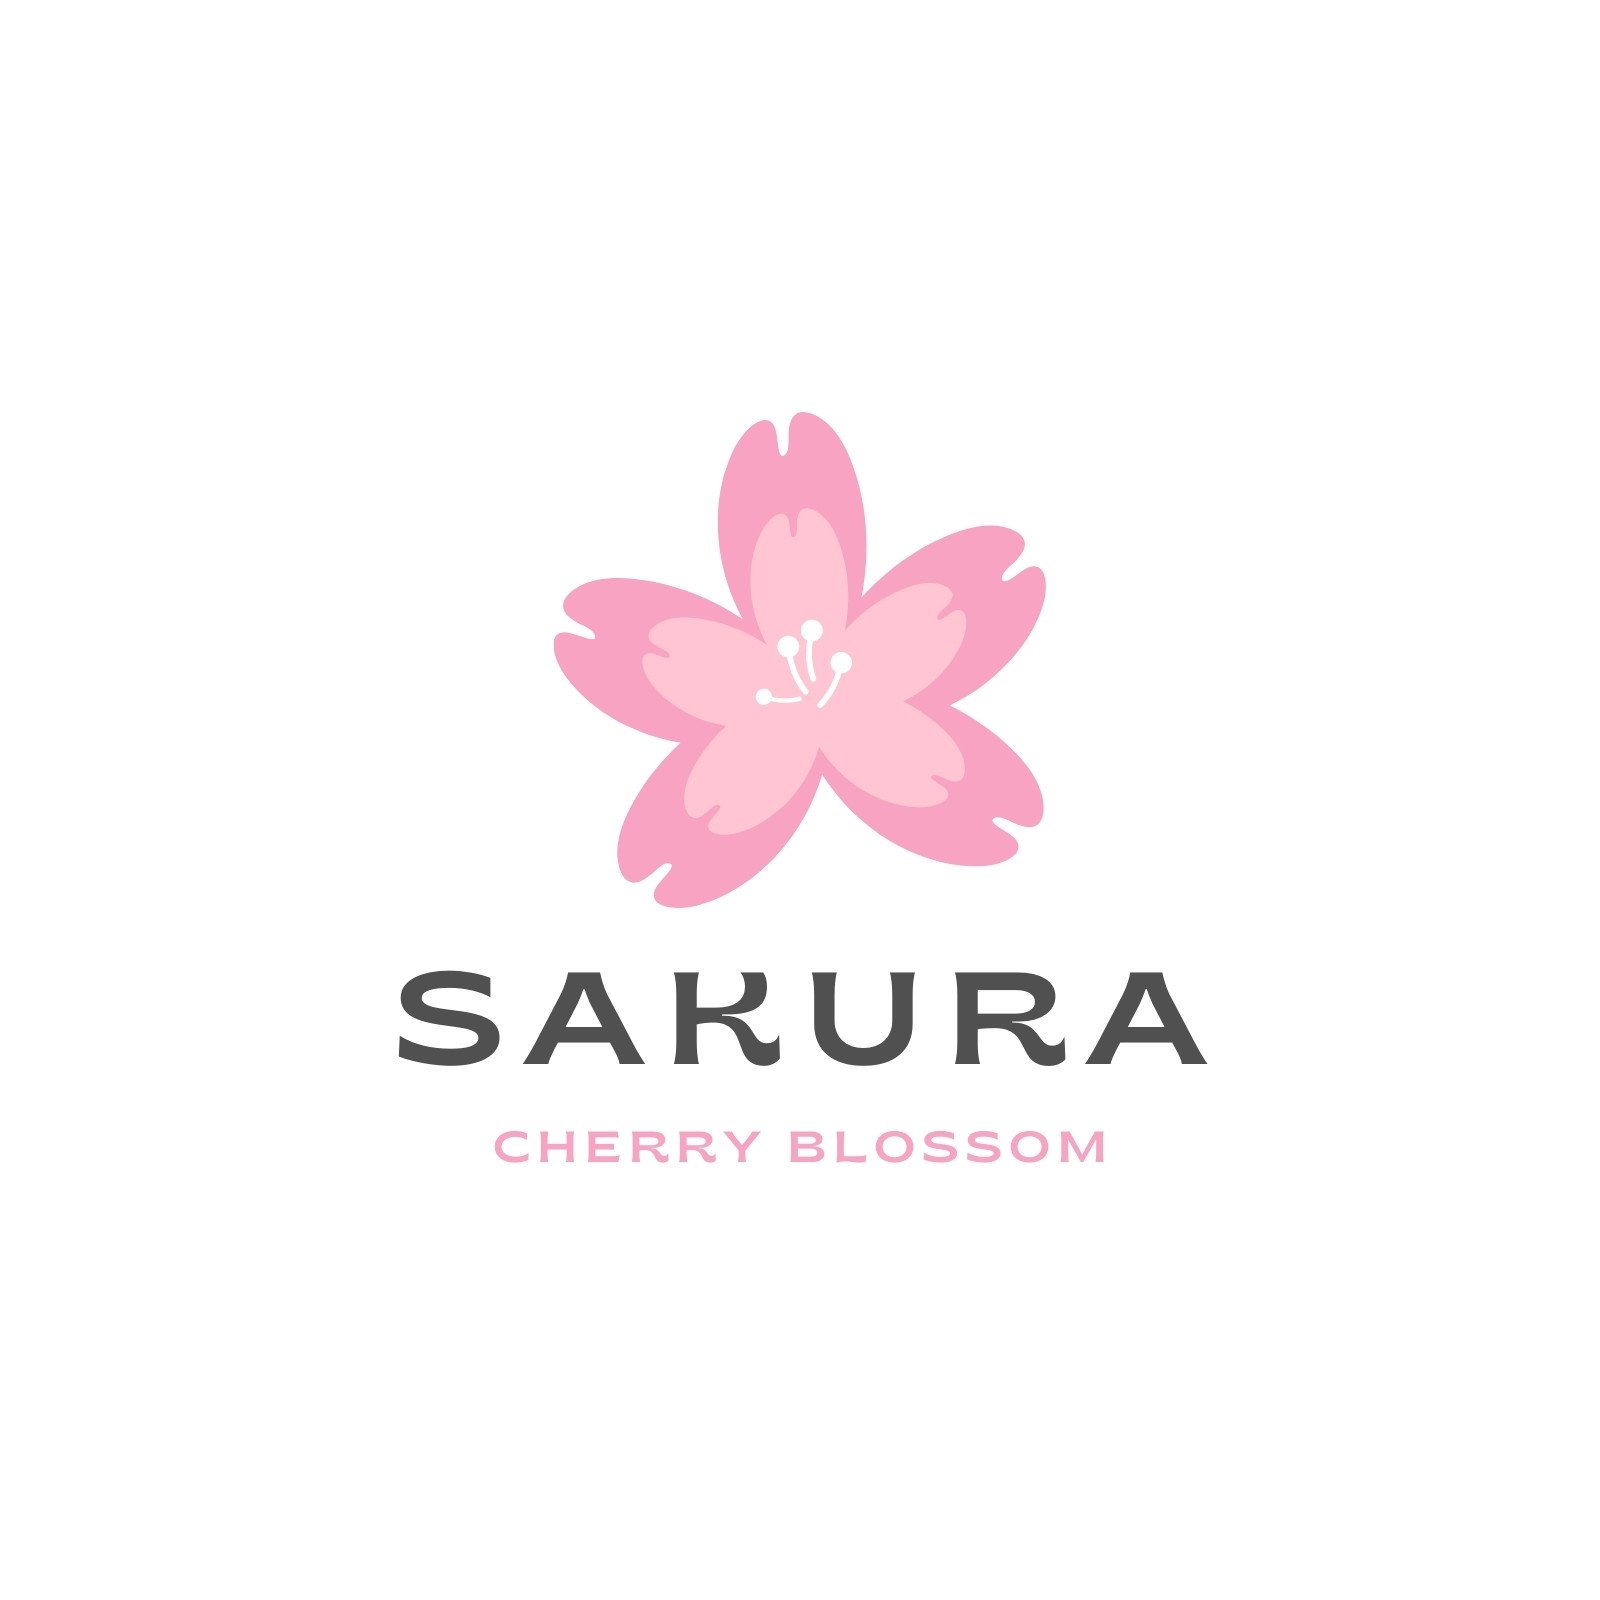 Cherry blossom logo icon Royalty Free Vector Image